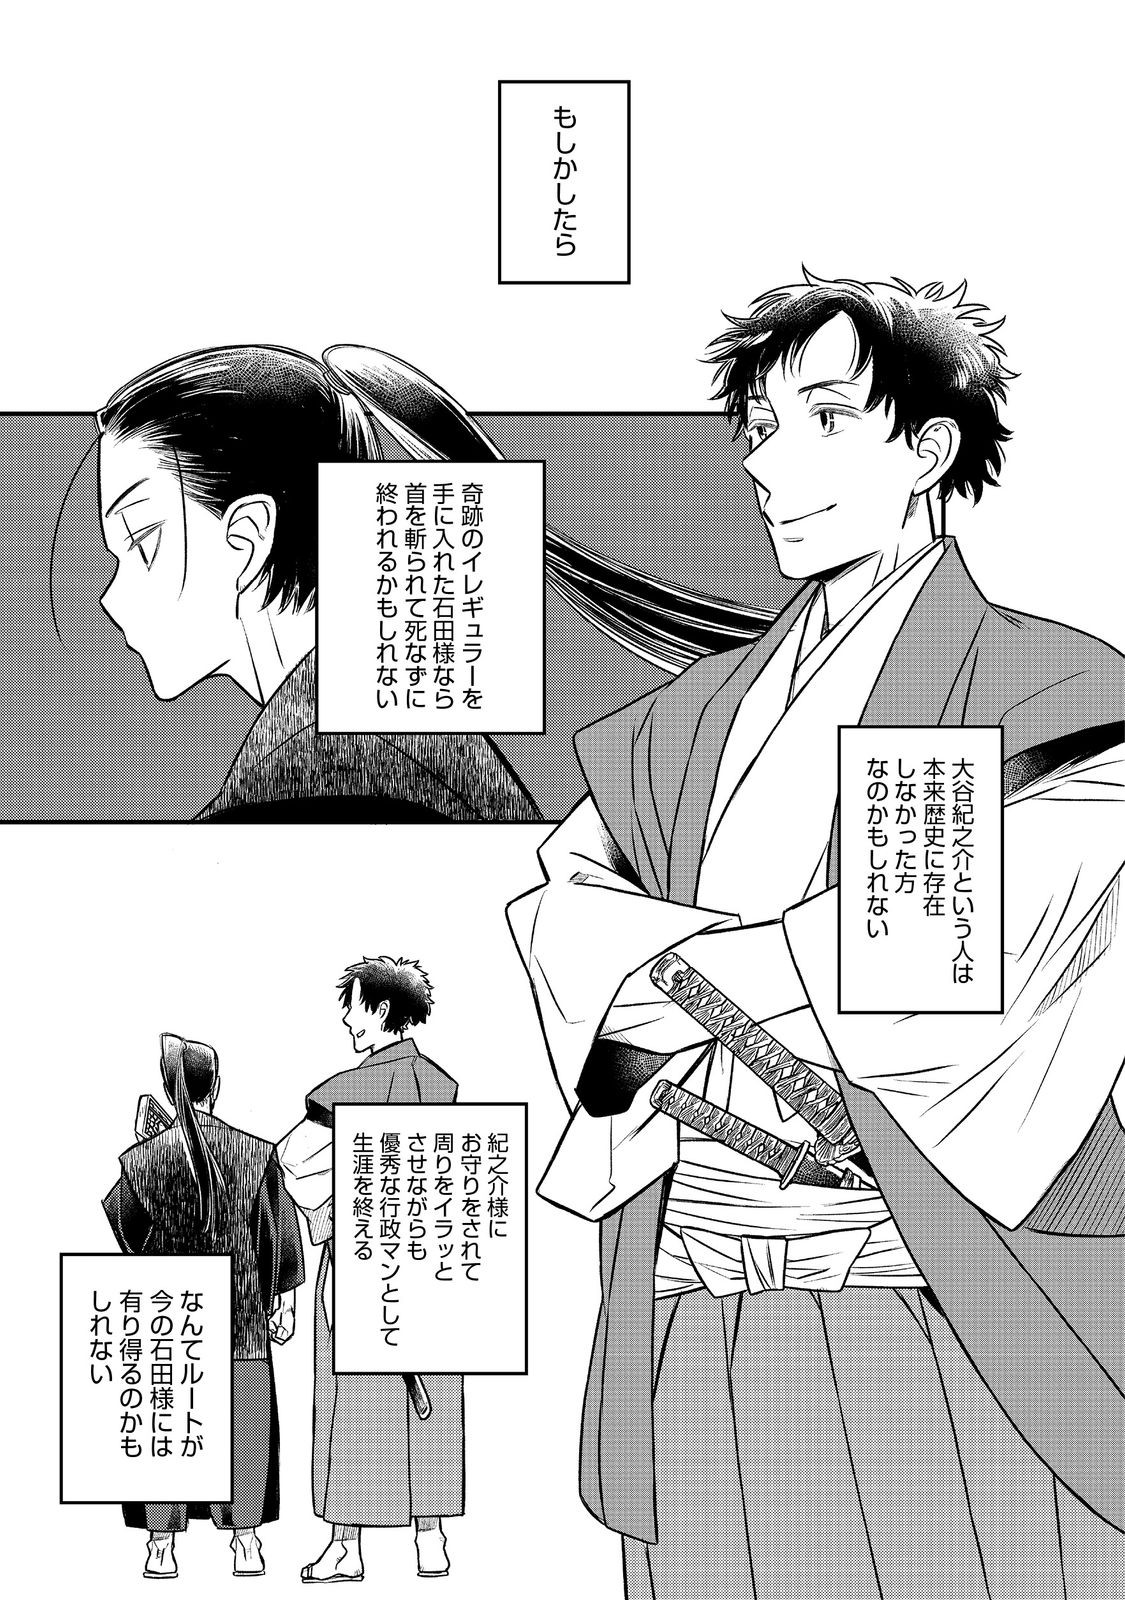 Kitanomandokoro-sama no Okeshougakari - Chapter 8.2 - Page 1